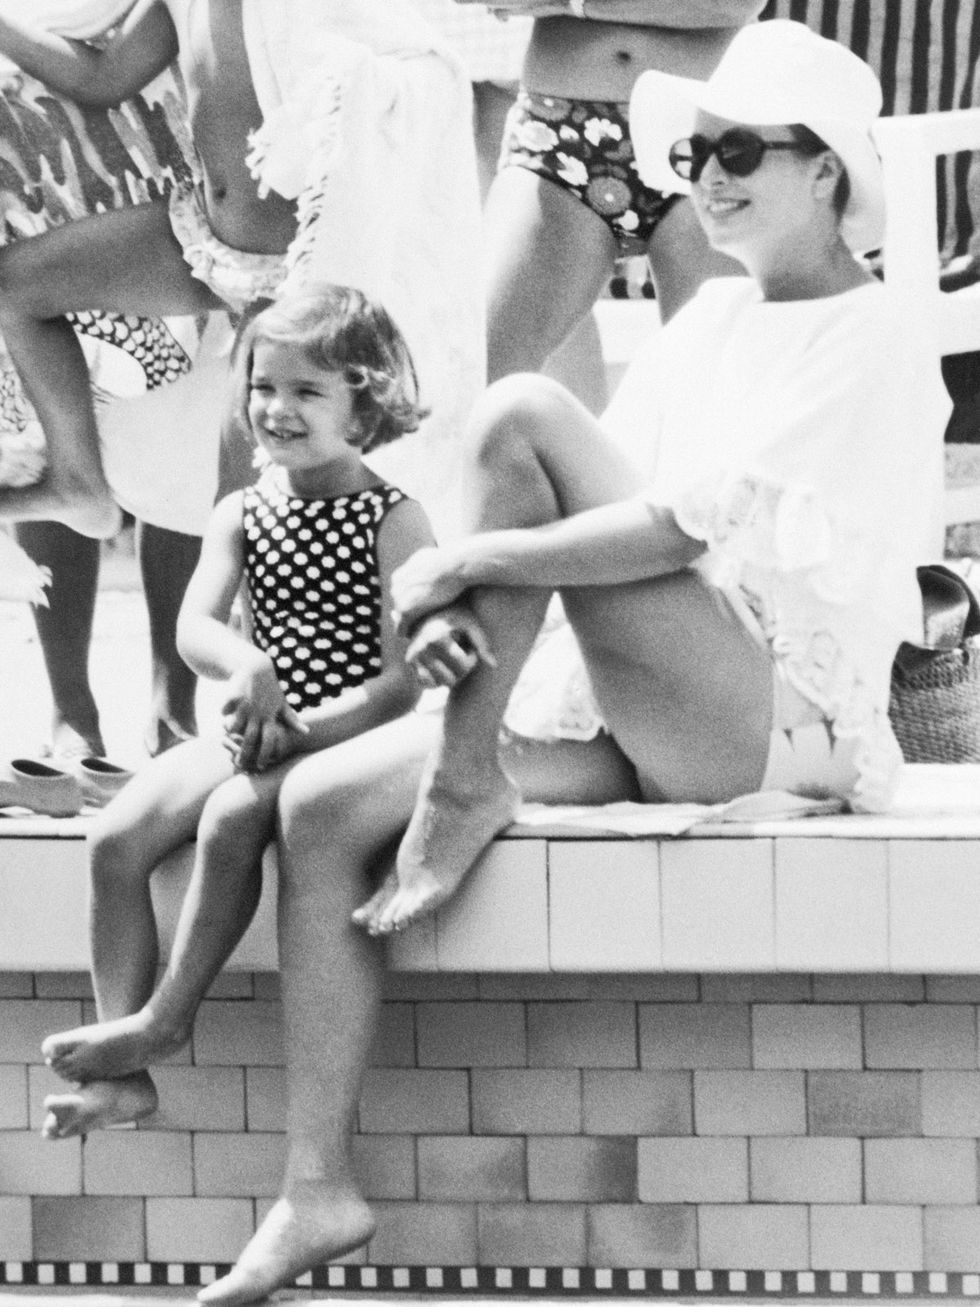 Photograph, Snapshot, Leg, Black-and-white, Retro style, Standing, Fun, Child, One-piece swimsuit, Human leg, 